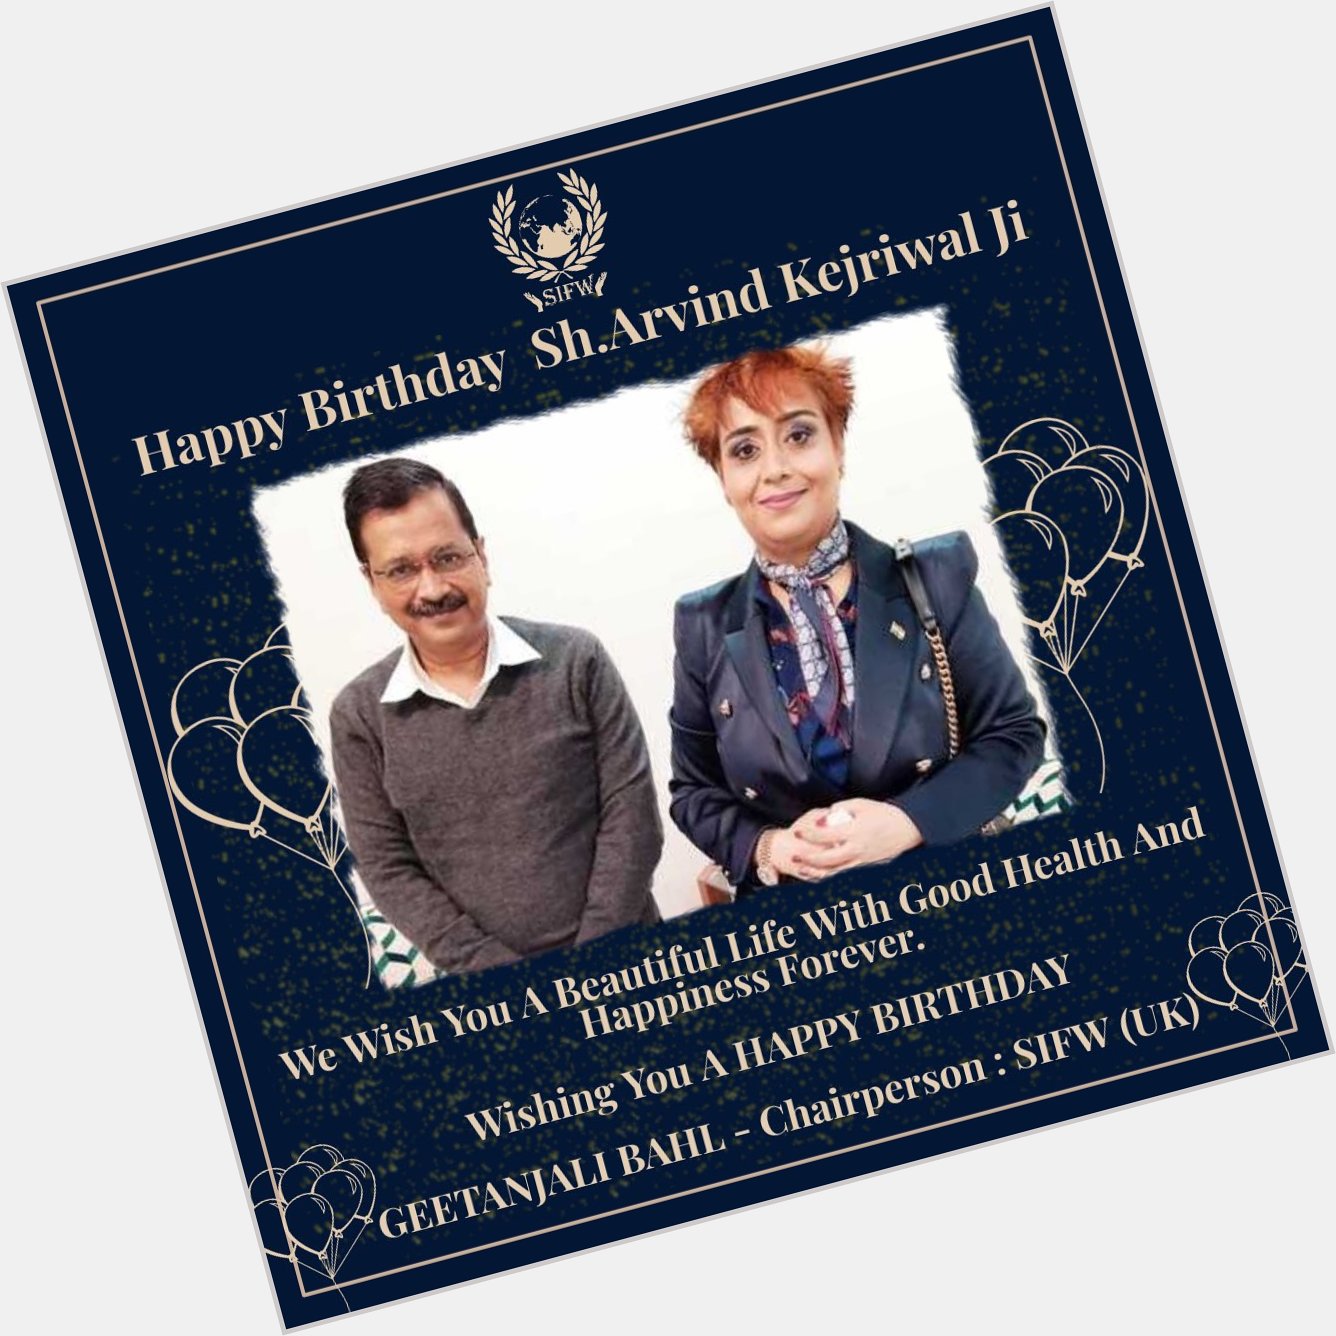 Wishing You A Happy Birthday Sh Arvind Kejriwal Ji - SIFW (UK) 